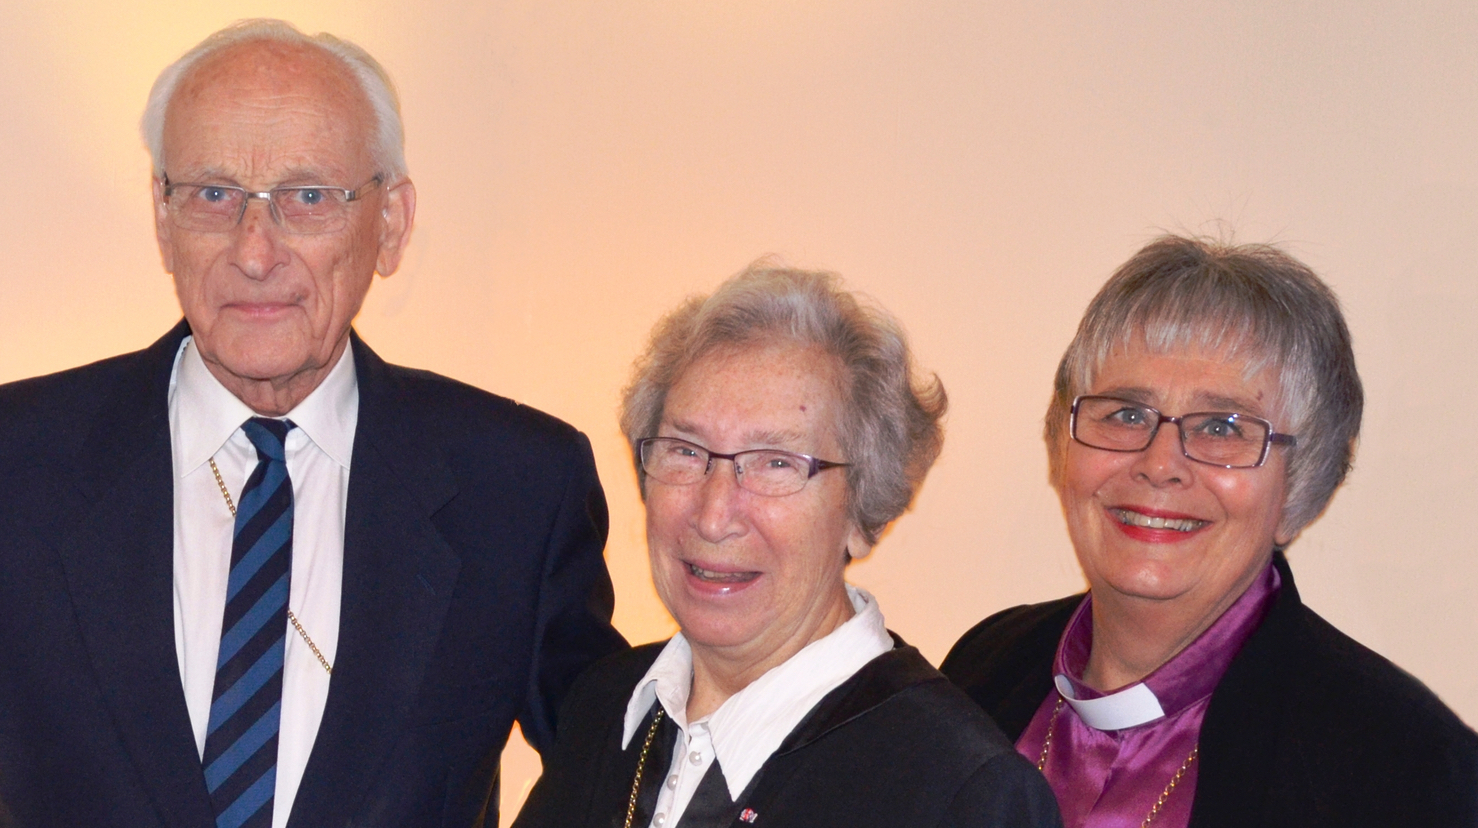 Biskop emeritus Georg Hille sammen med biskop emerita Rosemarie Köhn og biskop emerita Solveig Fiske. Bildet er tatt under biskopens nyttårsmottakelse i 2014. Foto: Britt Agnete Enemo